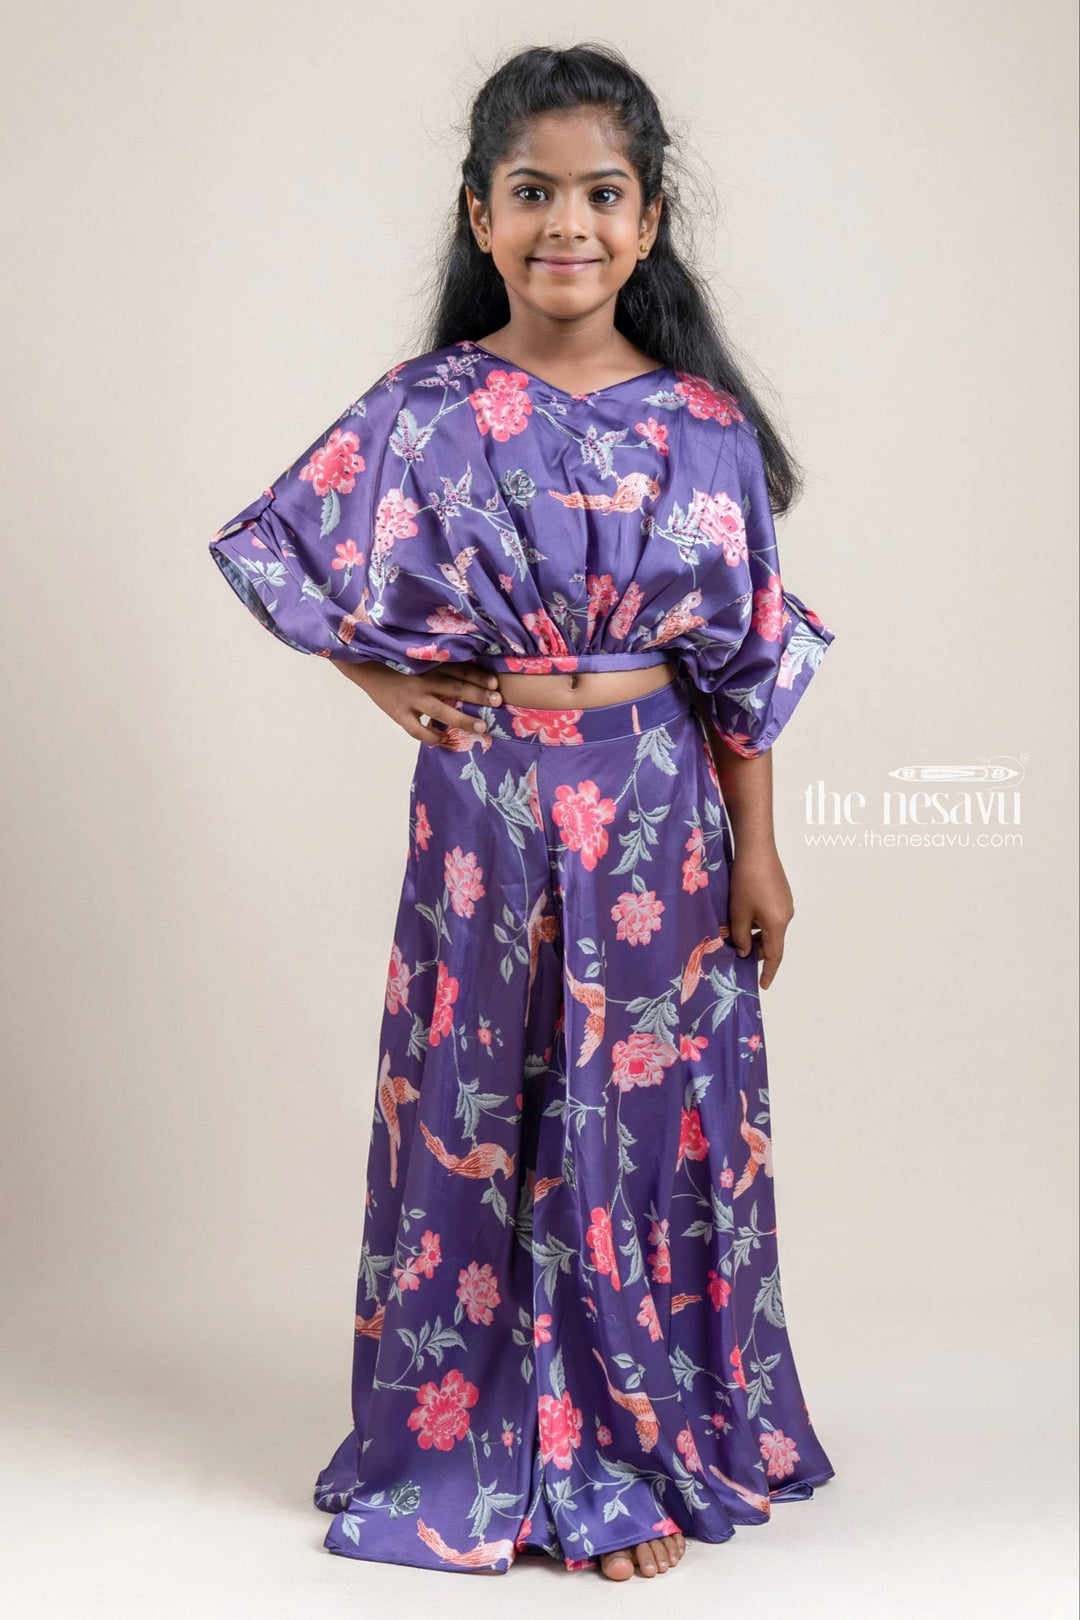 The Nesavu Girls Sharara / Plazo Set Charming Purple Floral Printed Top And Skirt For Young Girls Nesavu 24 (5Y) / Purple / Chinnon Chiffon GPS142-24 Premium Floral Printed Top And Skirt | Tunic Top Collection | The Nesavu